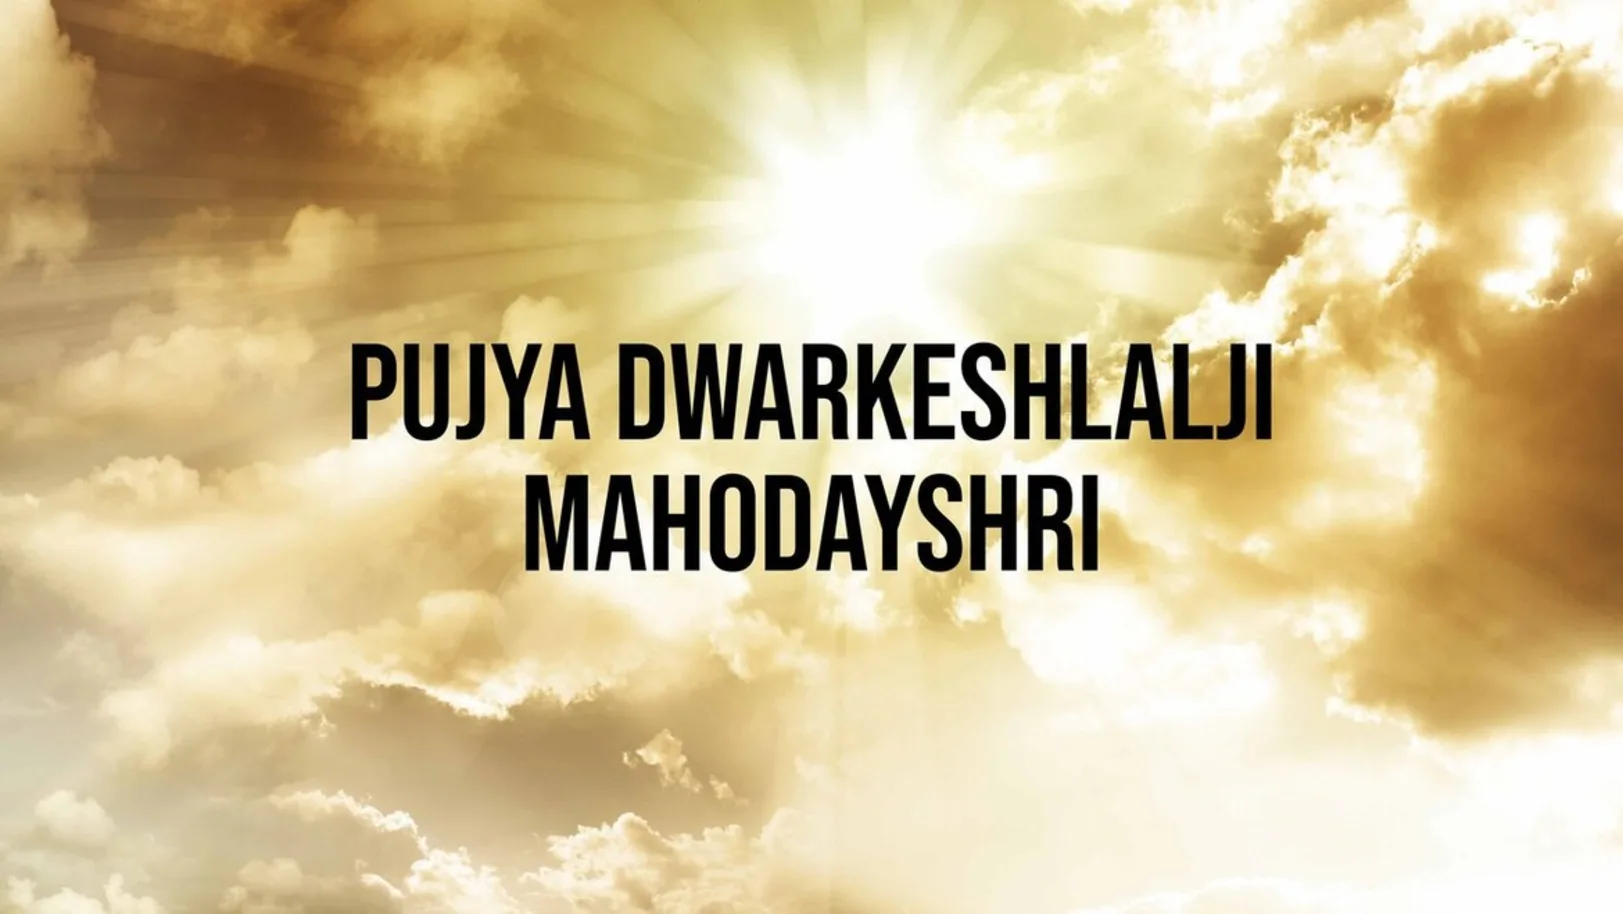 Pujya Dwarkeshlalji Mahodayshri Streaming Now On Aastha Gujarati